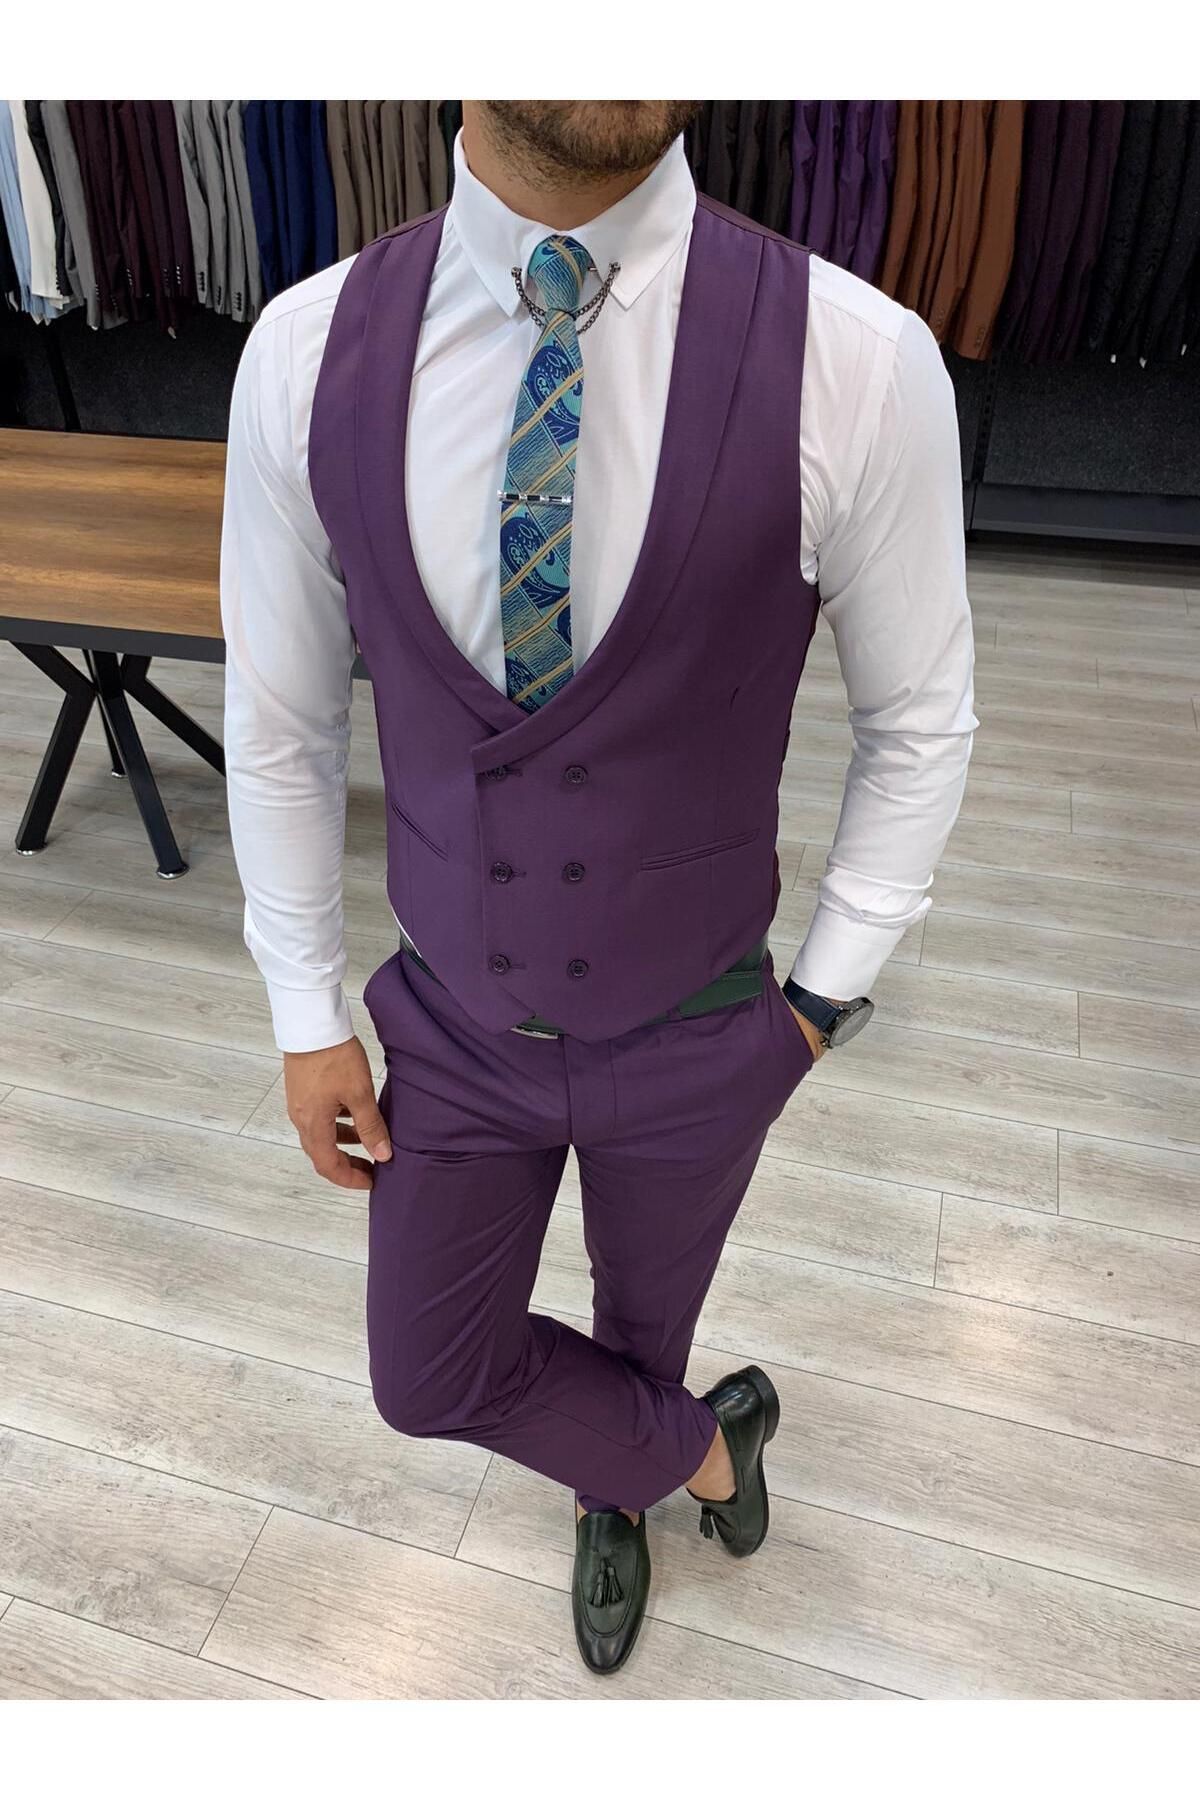 LONATOLİA Erkek Takım Elbise Kırlangıç Yaka İtalyan Stil Slim Fit Ceket Yelek Pantolon